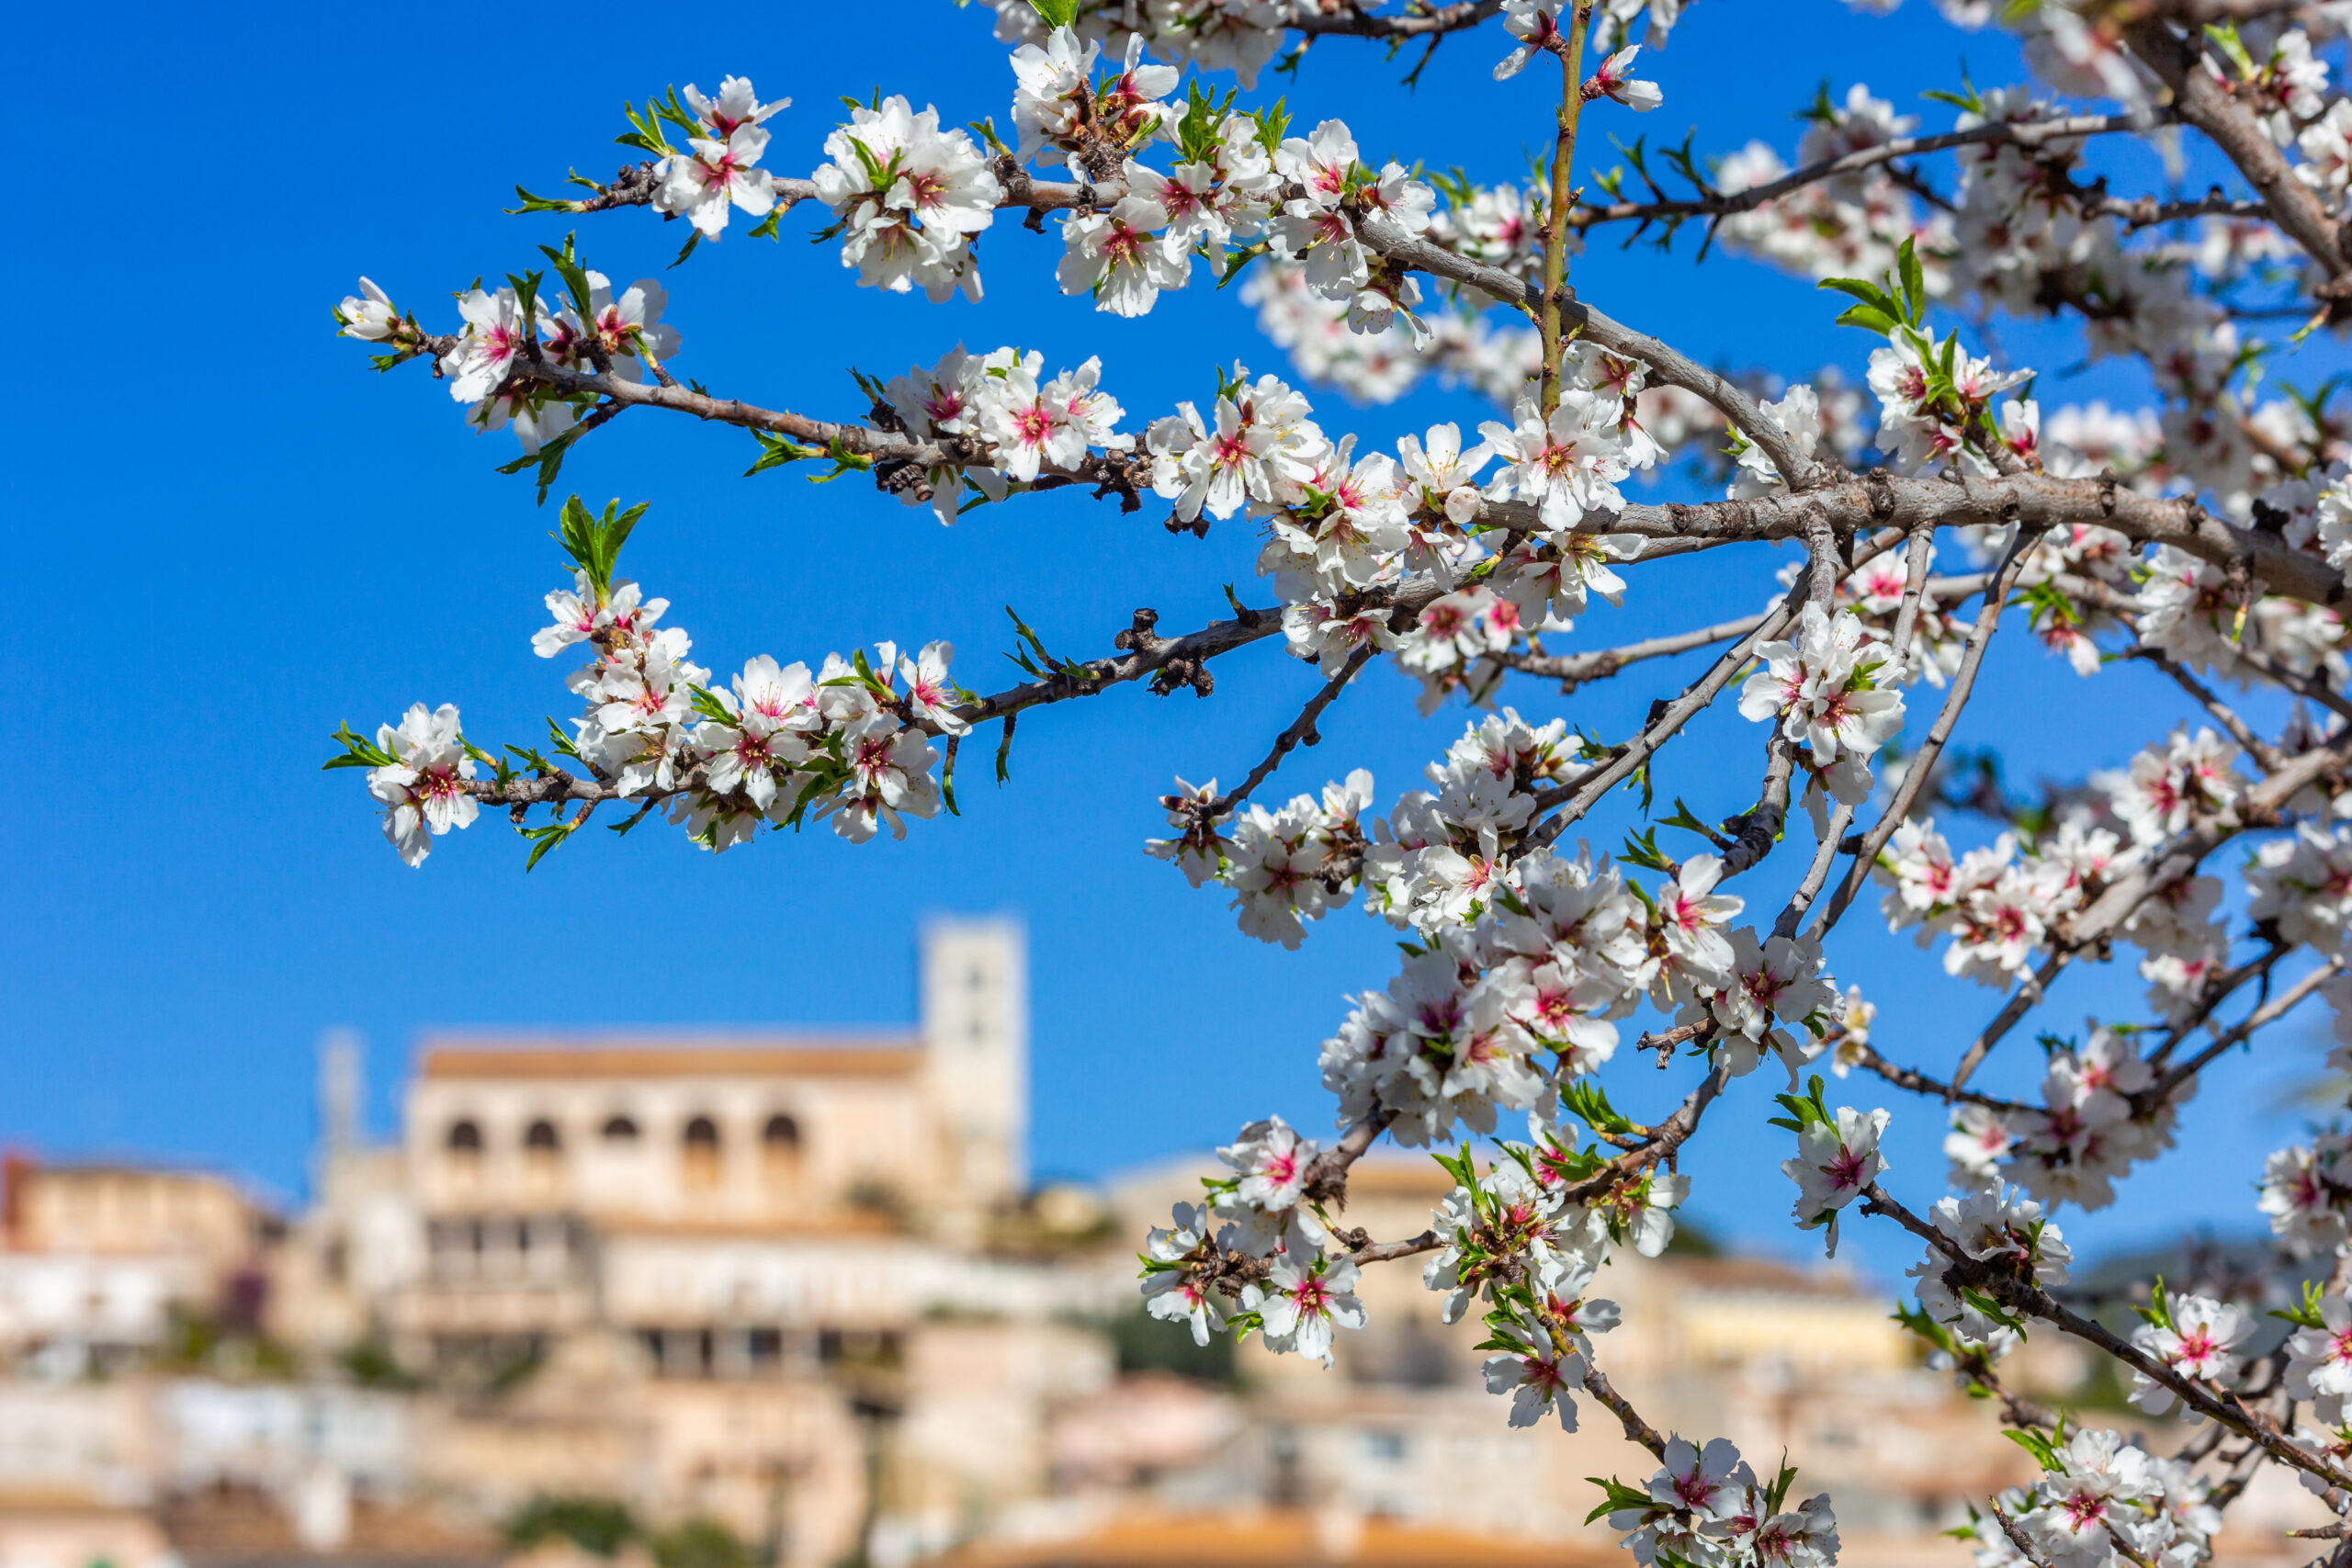 Almond blossom season in village Selva, Mallorca, Balearic Islands, Spain